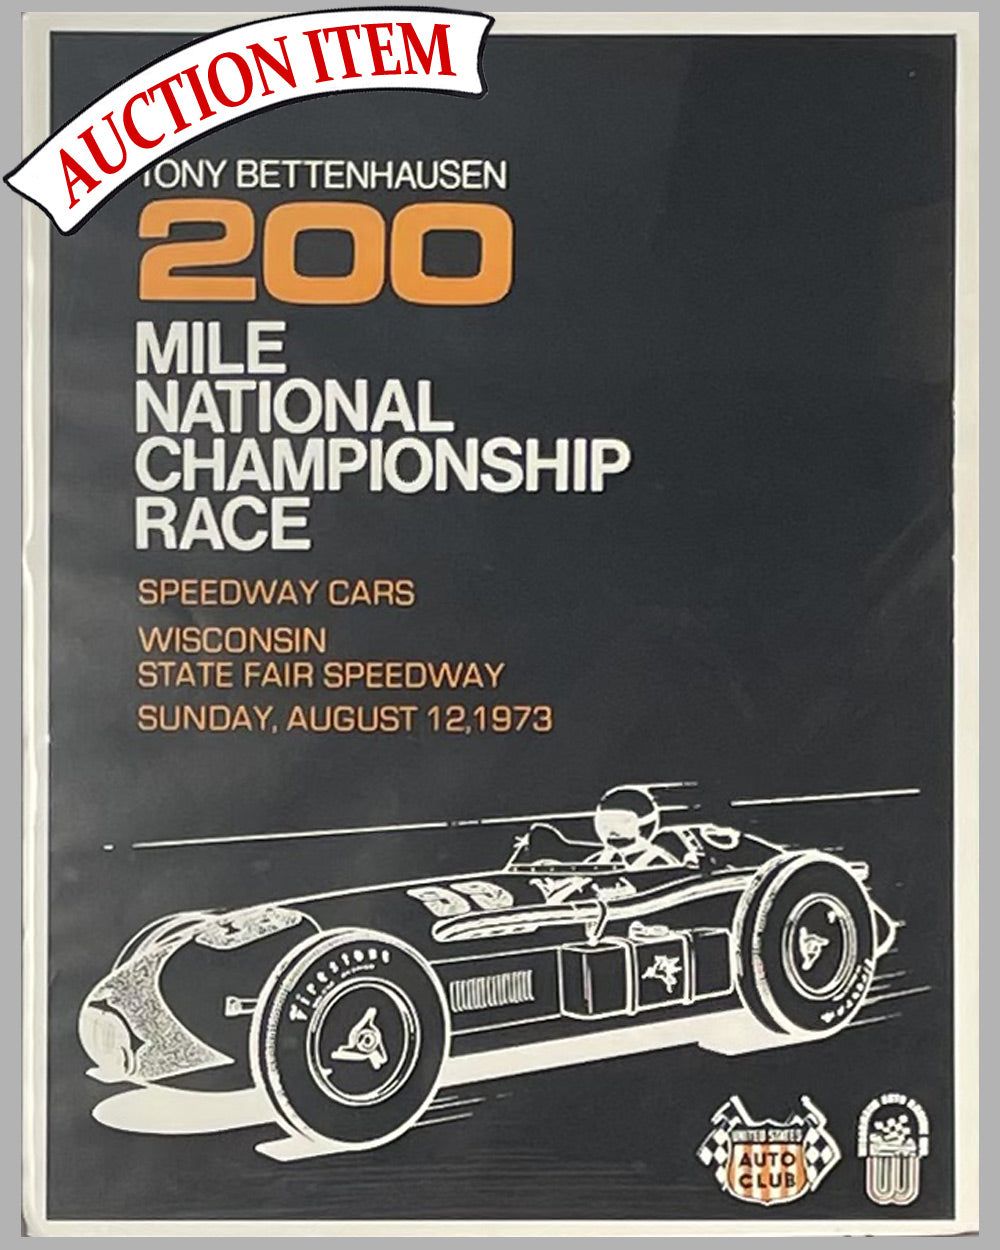 9 - Tony Bettenhausen 200 Mile National Championship original race poster